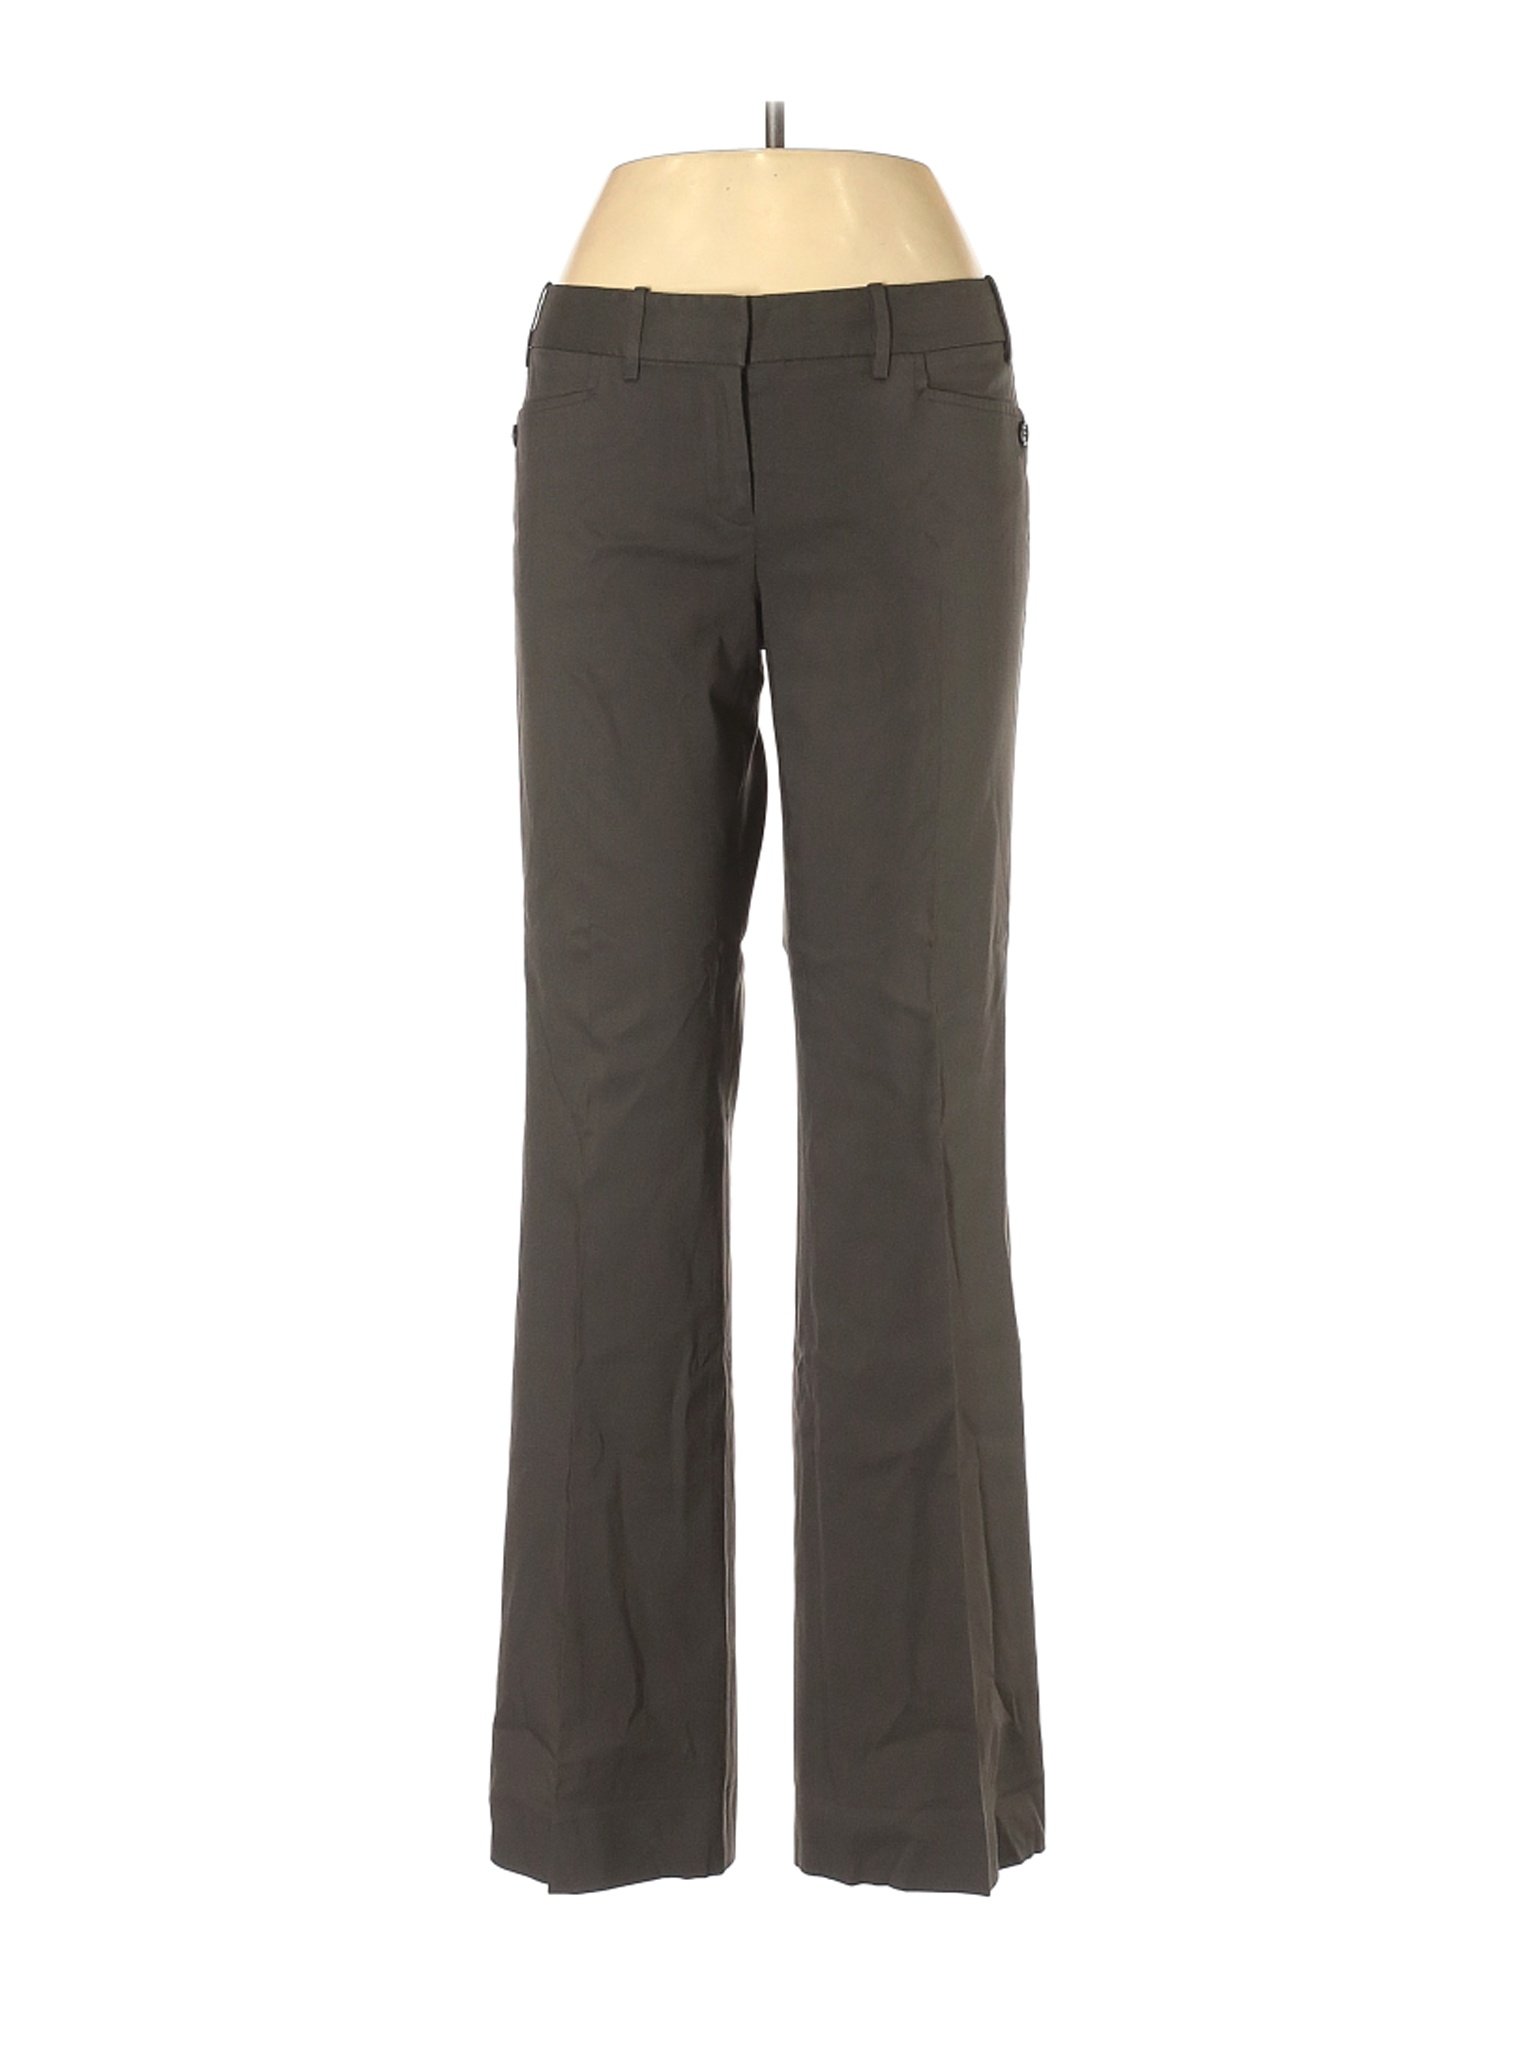 The Limited Women Brown Dress Pants 10 | eBay